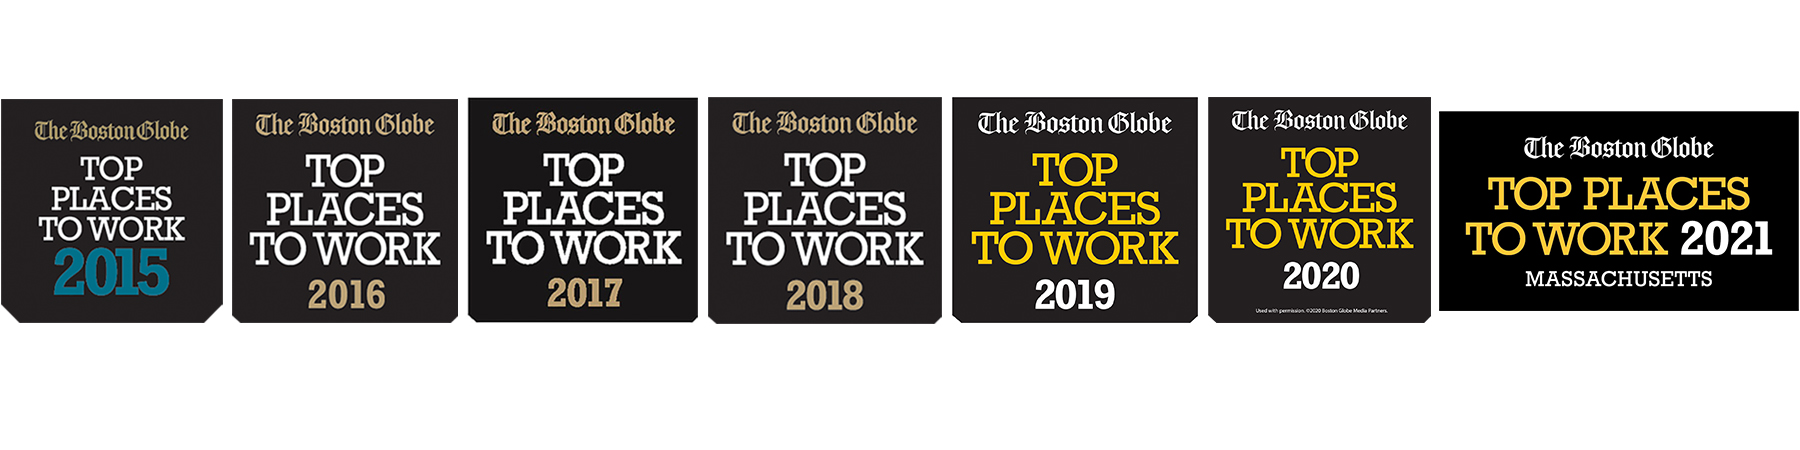 Boston Globe Top Places to work logos for years 2015 through 2021